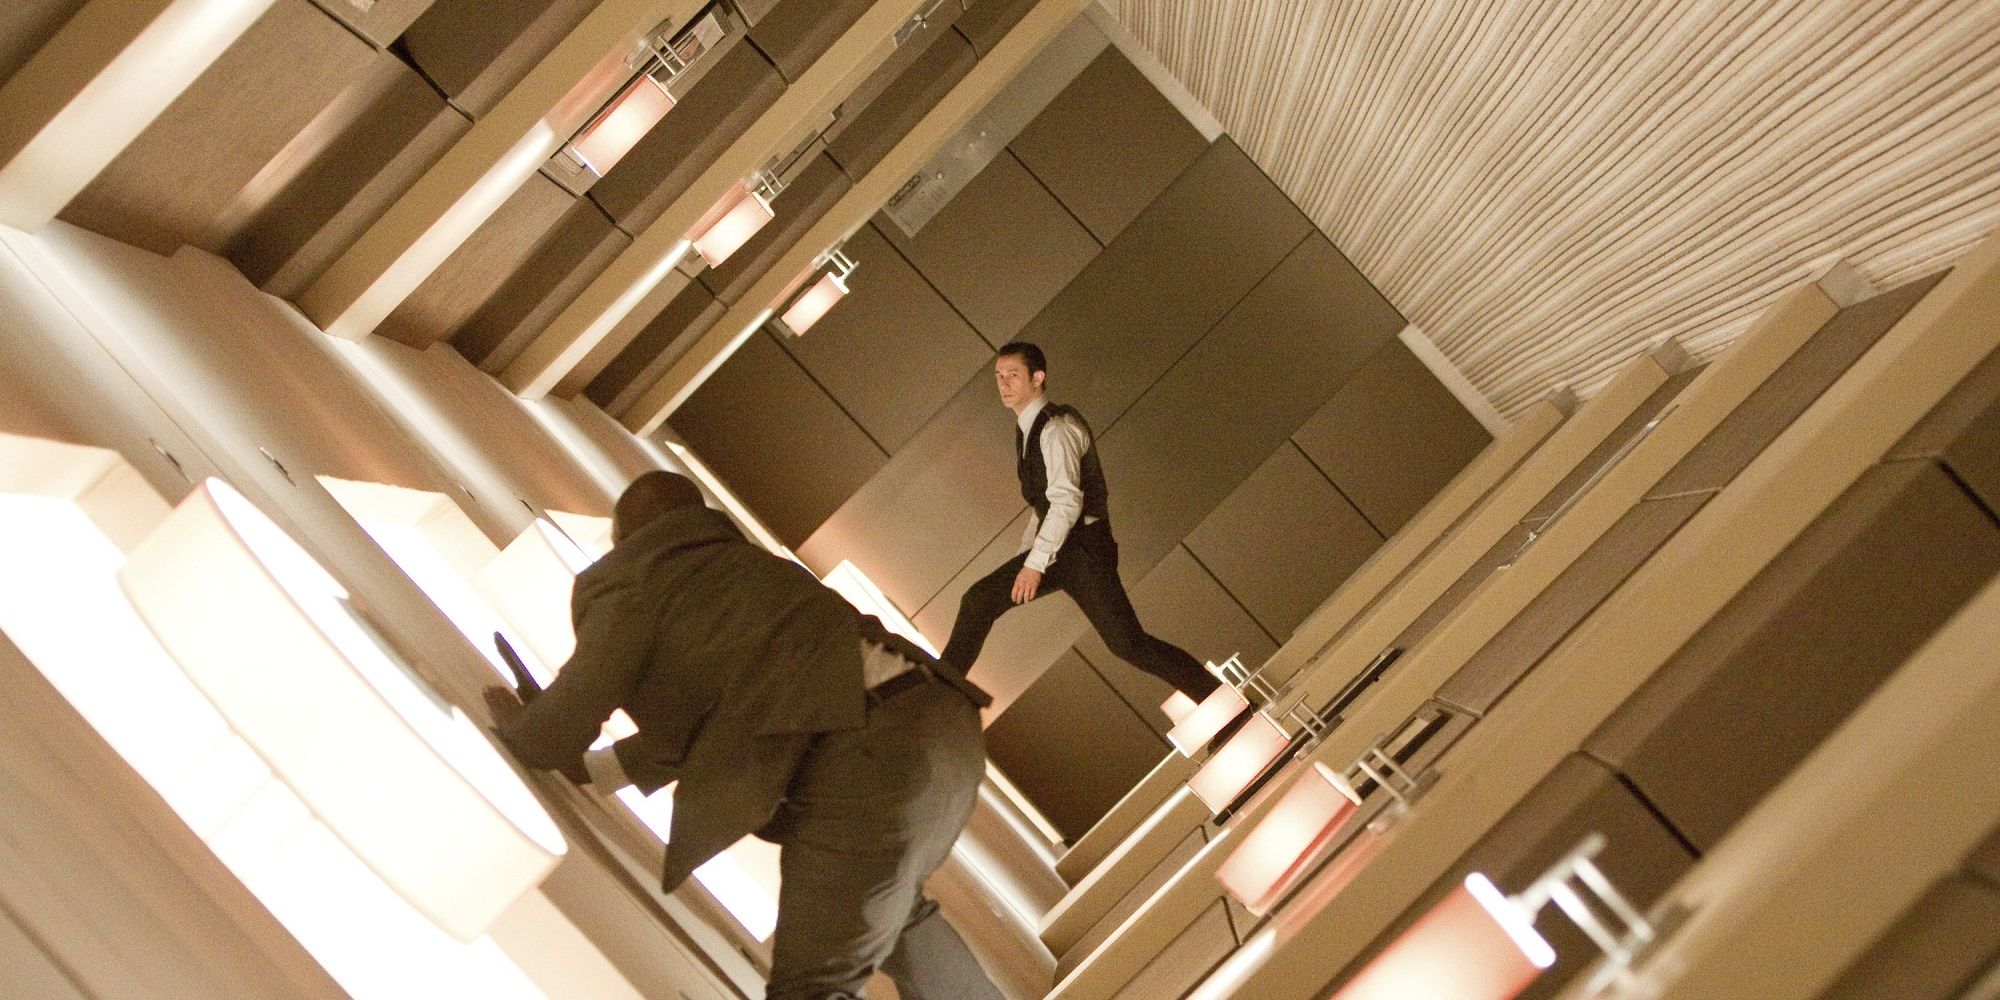 Arthur battling people in the upside down, turning hotel hallways.